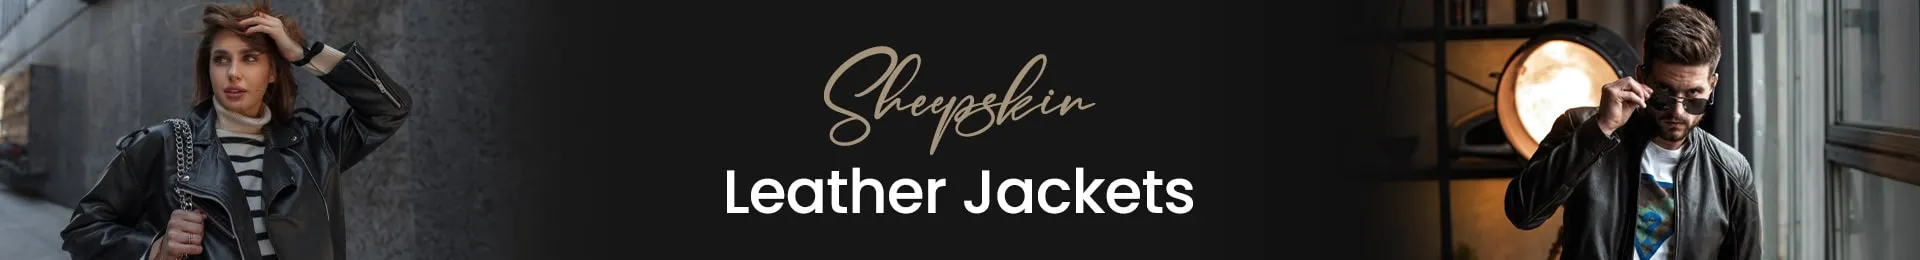 Shop Sheepskin Leather Jackets for Men and Women - SCIN